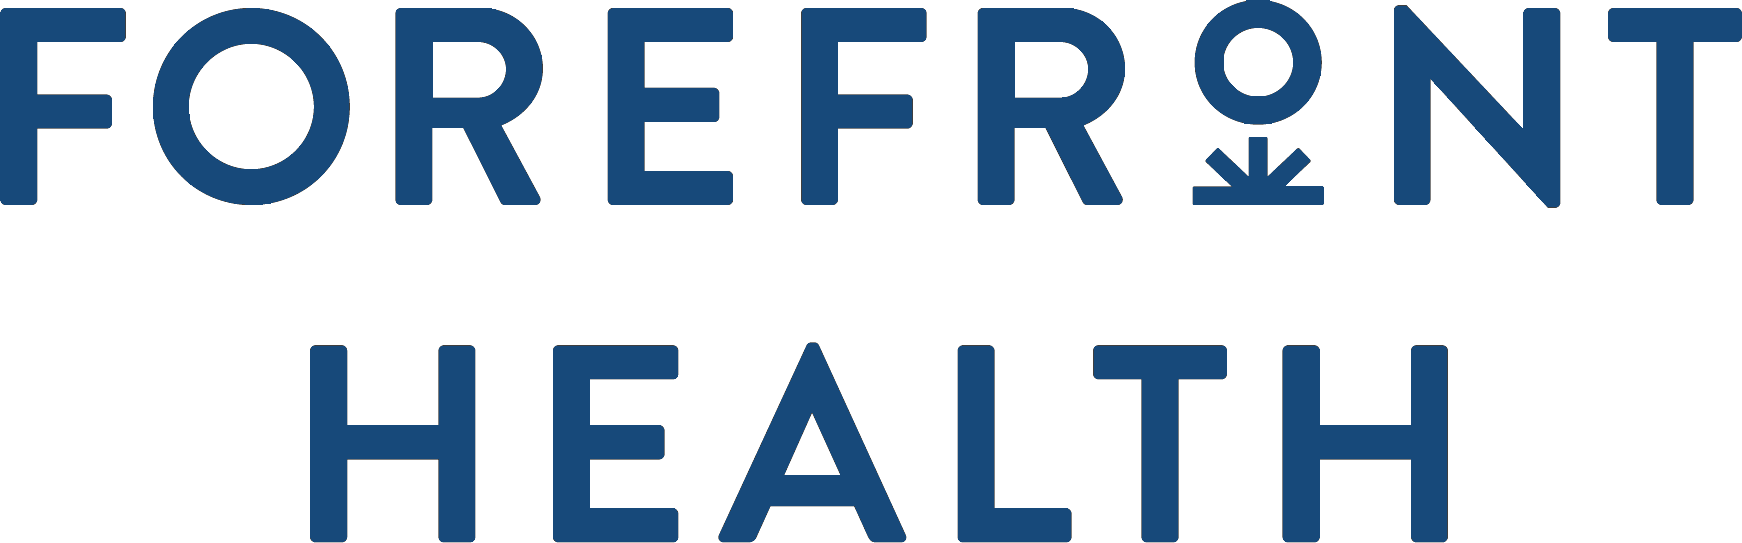 Forefront Health logo